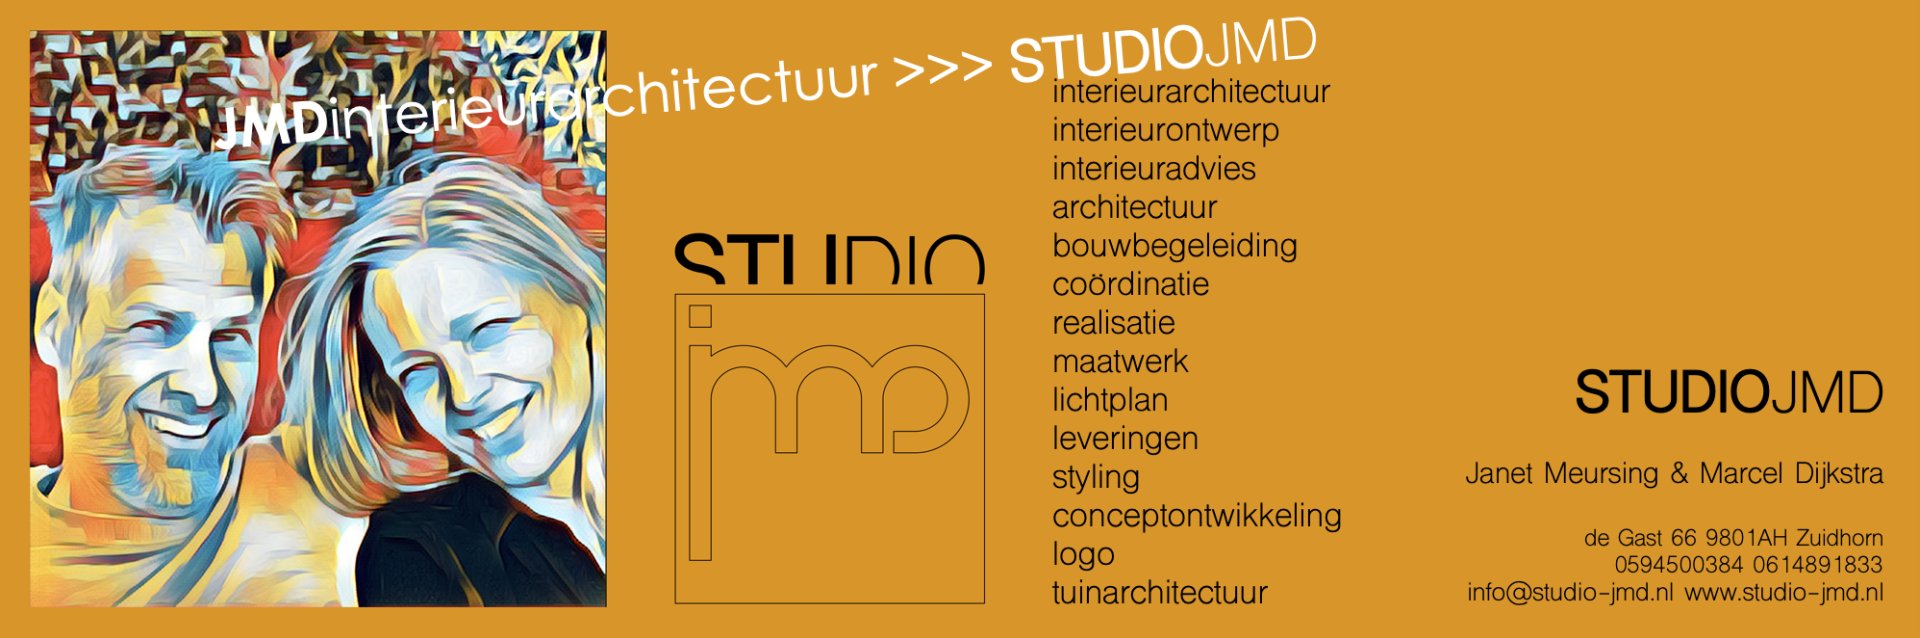 Interieurarchitect Groningen - STUDIO JMD